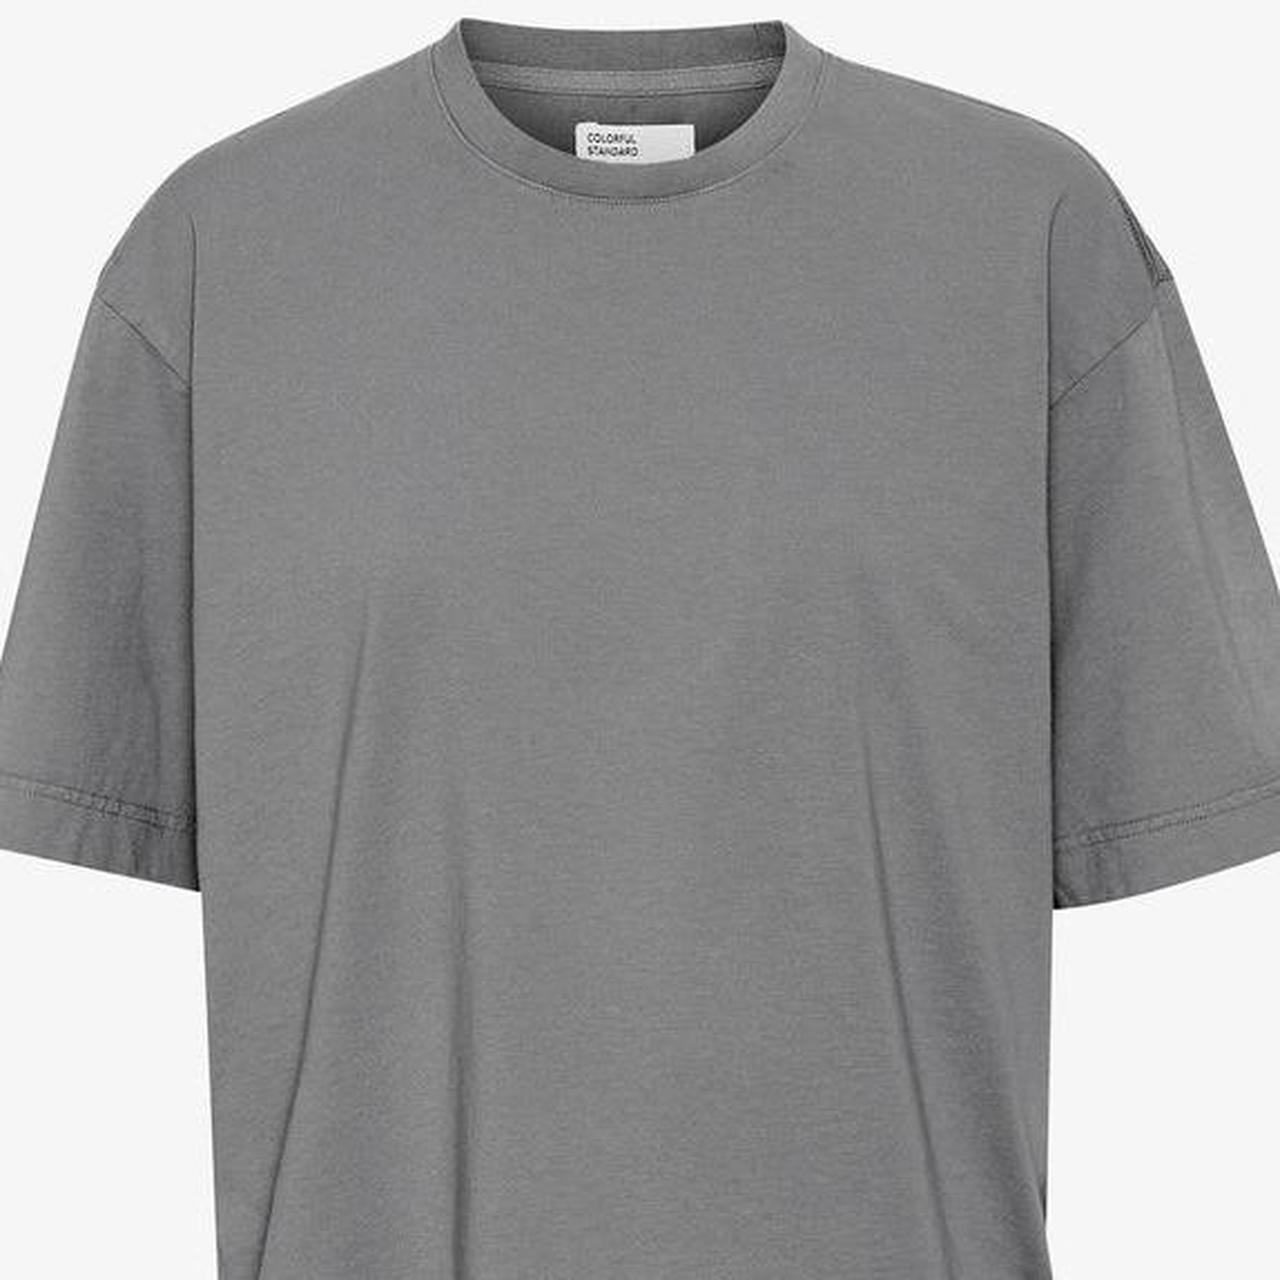 Colorful Standard Women's Grey T-shirt (2)